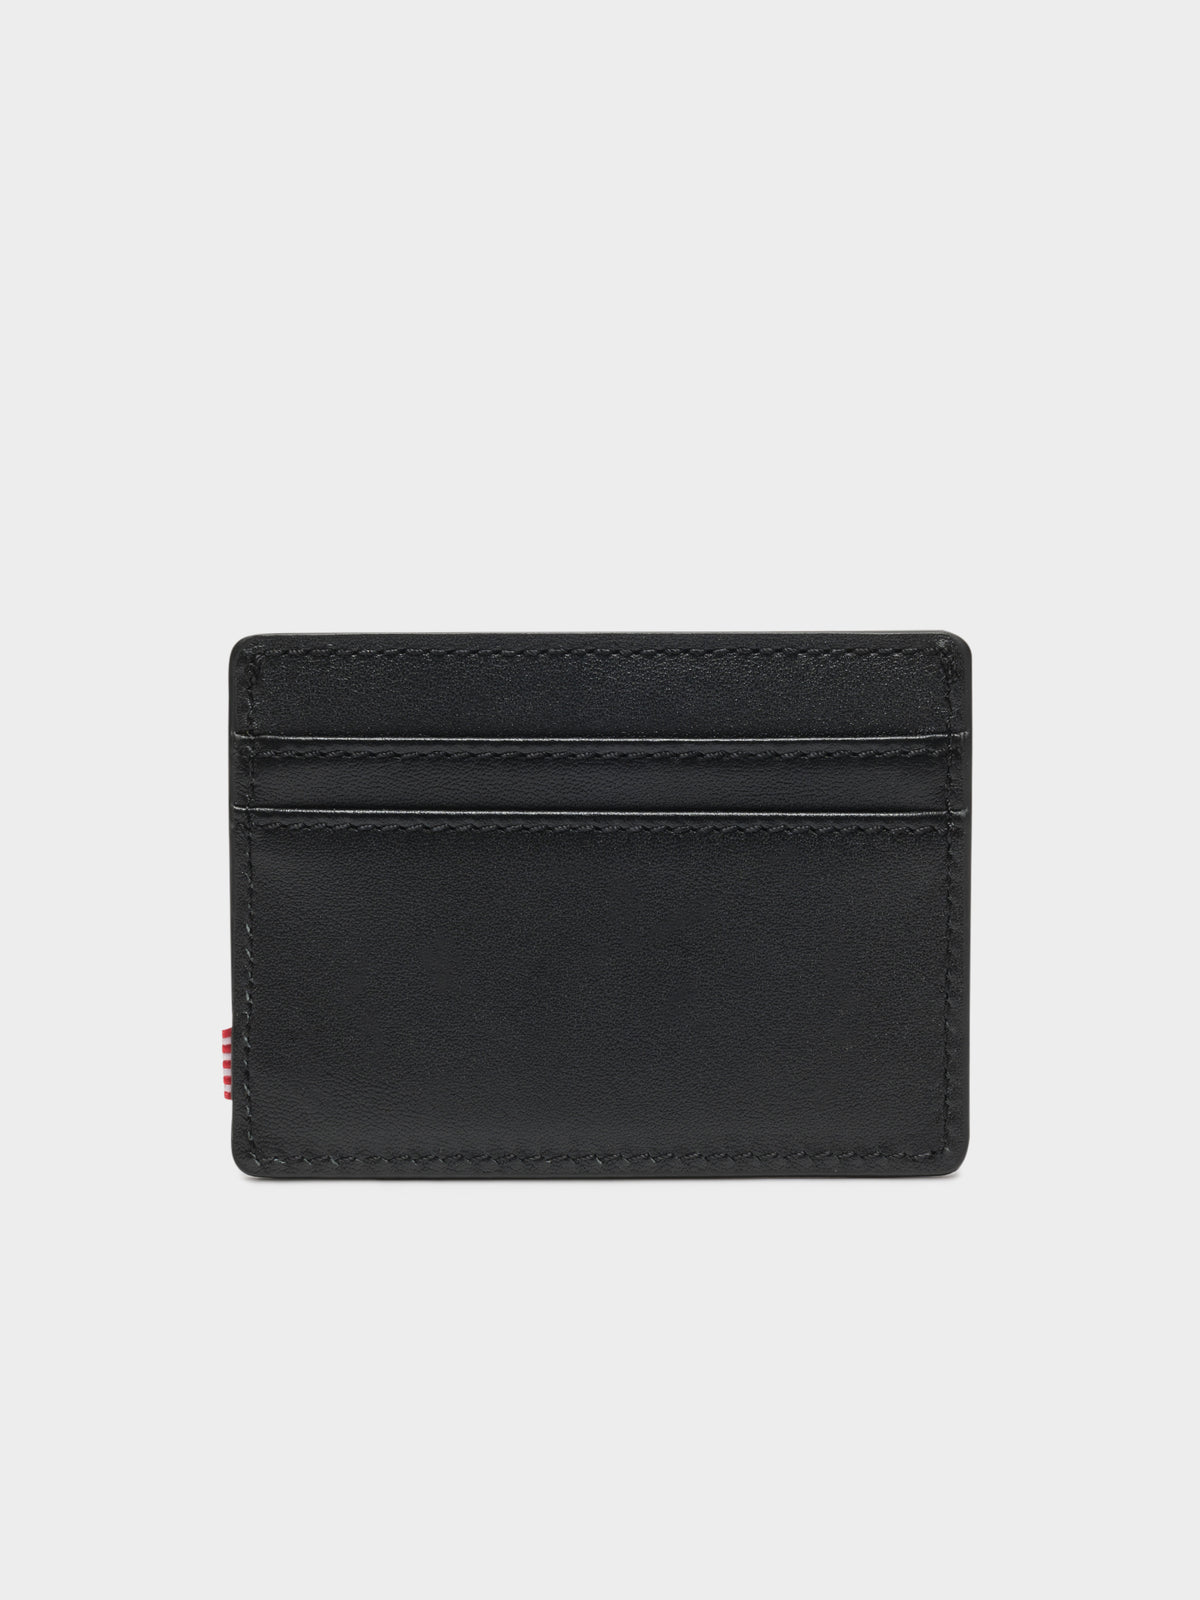 Charlie Leather Wallet in Black